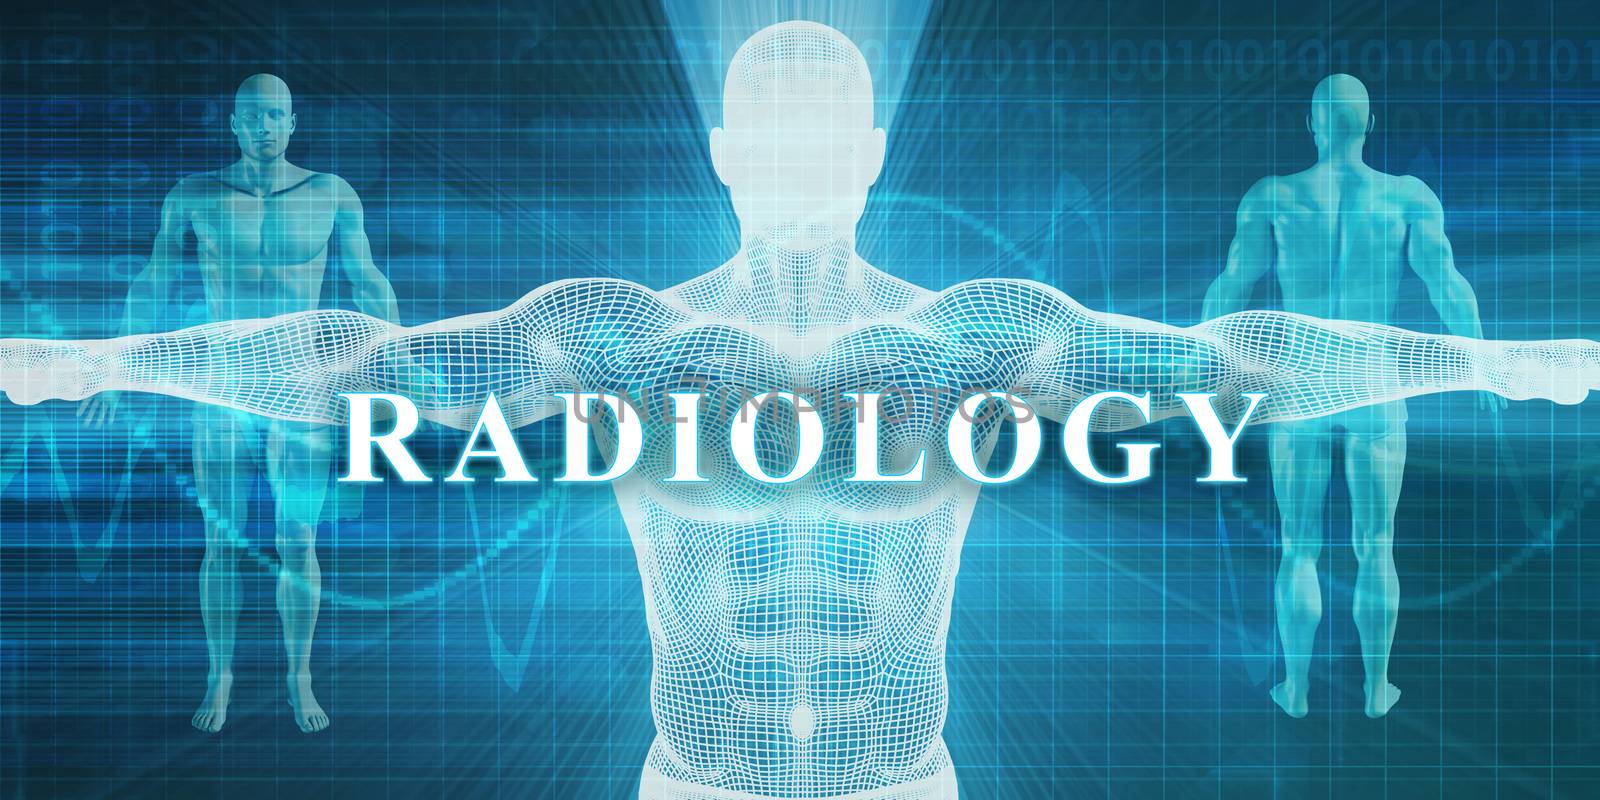 Radiology by kentoh